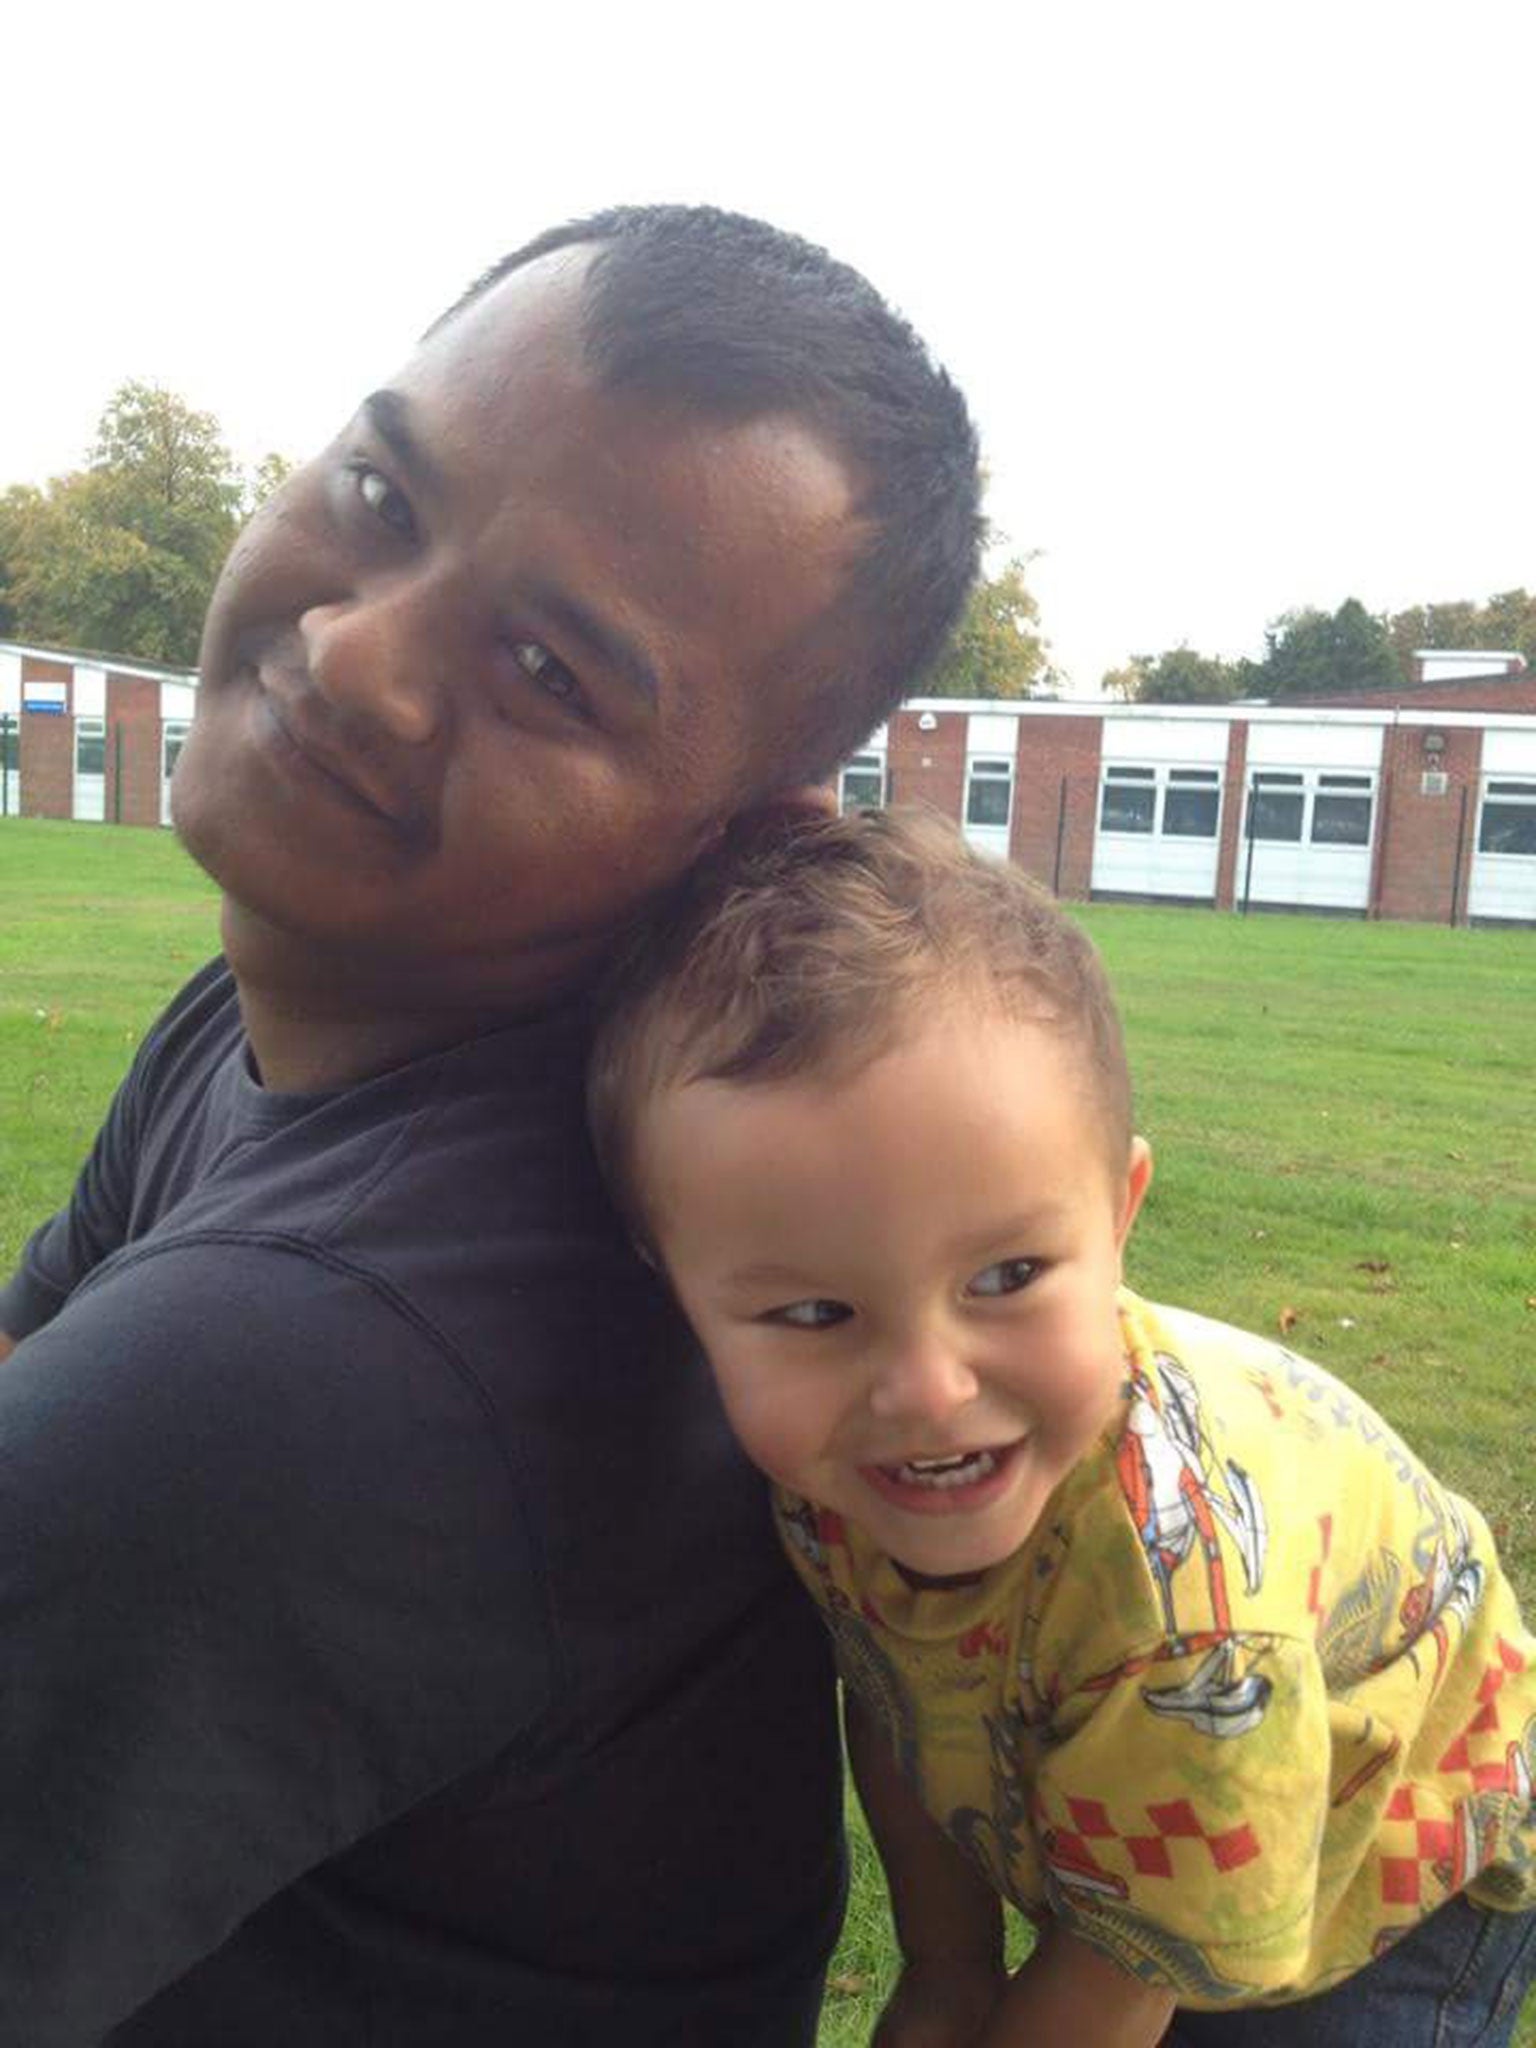 Jalin Beaksantia pictured with his toddler son, Kai